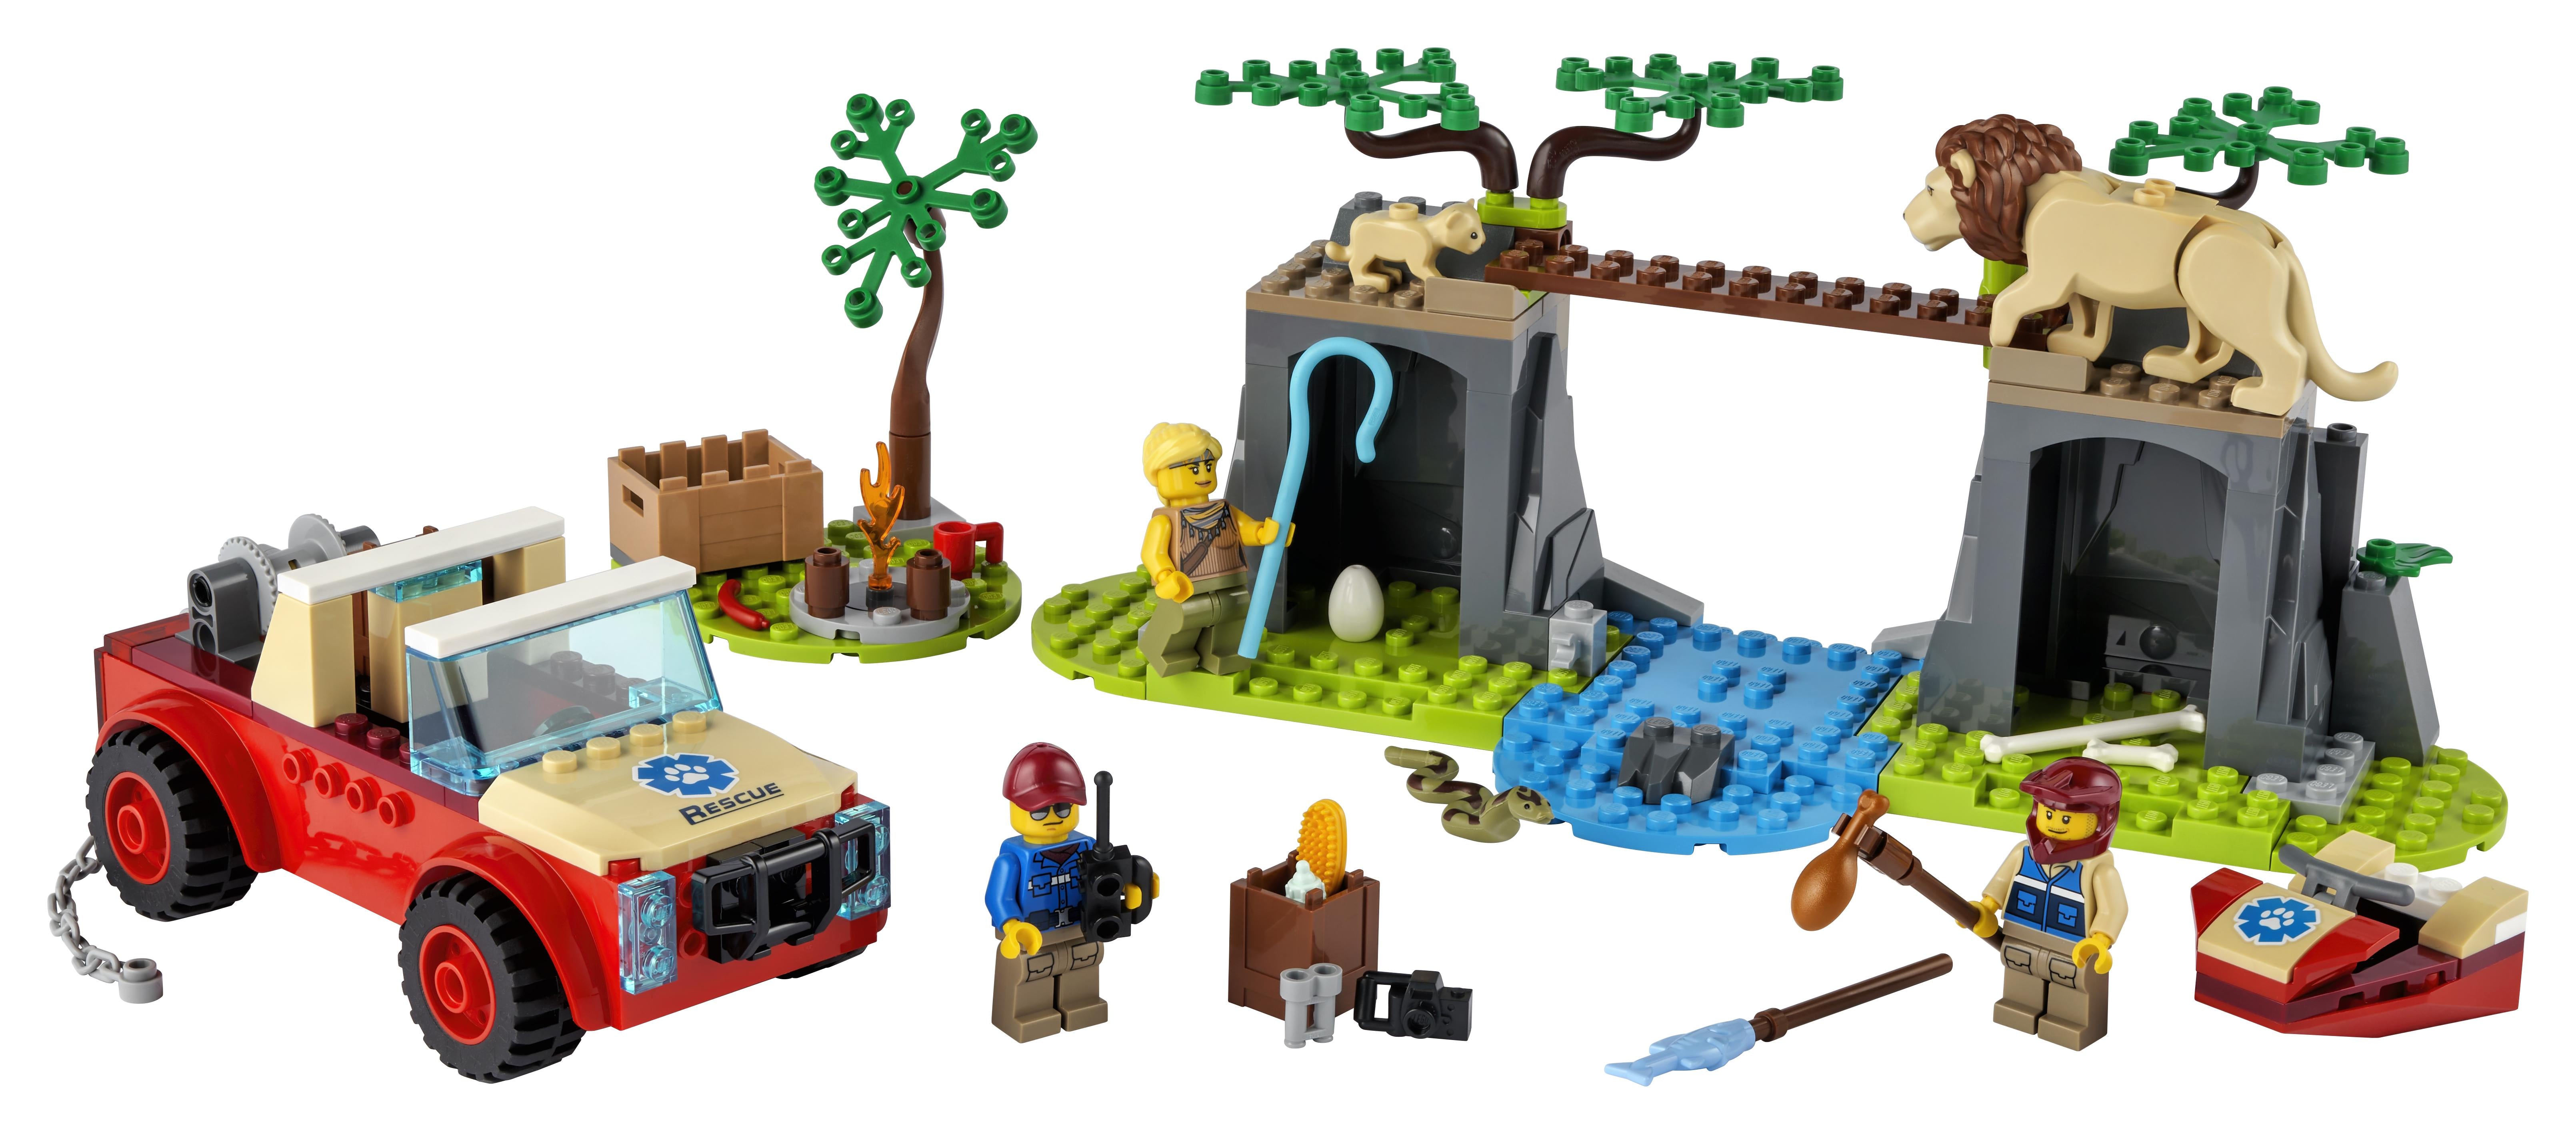 LEGO® City Wildlife Rescue Off Roader Car Toy 60301 Default Title